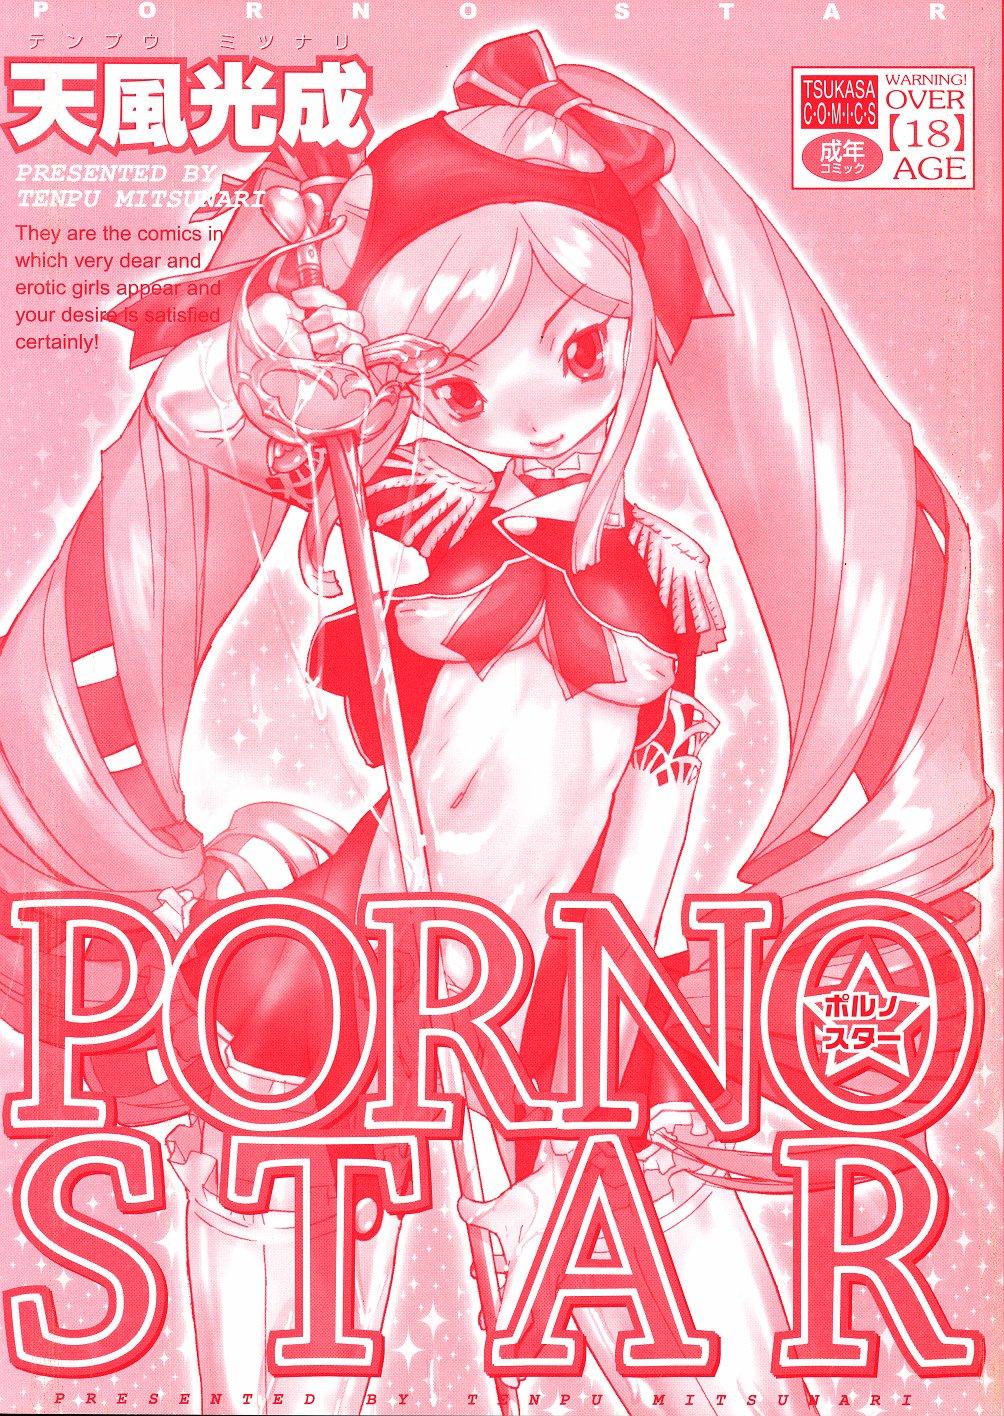 Hot Naked Girl PORNO STAR Gostoso - Page 3